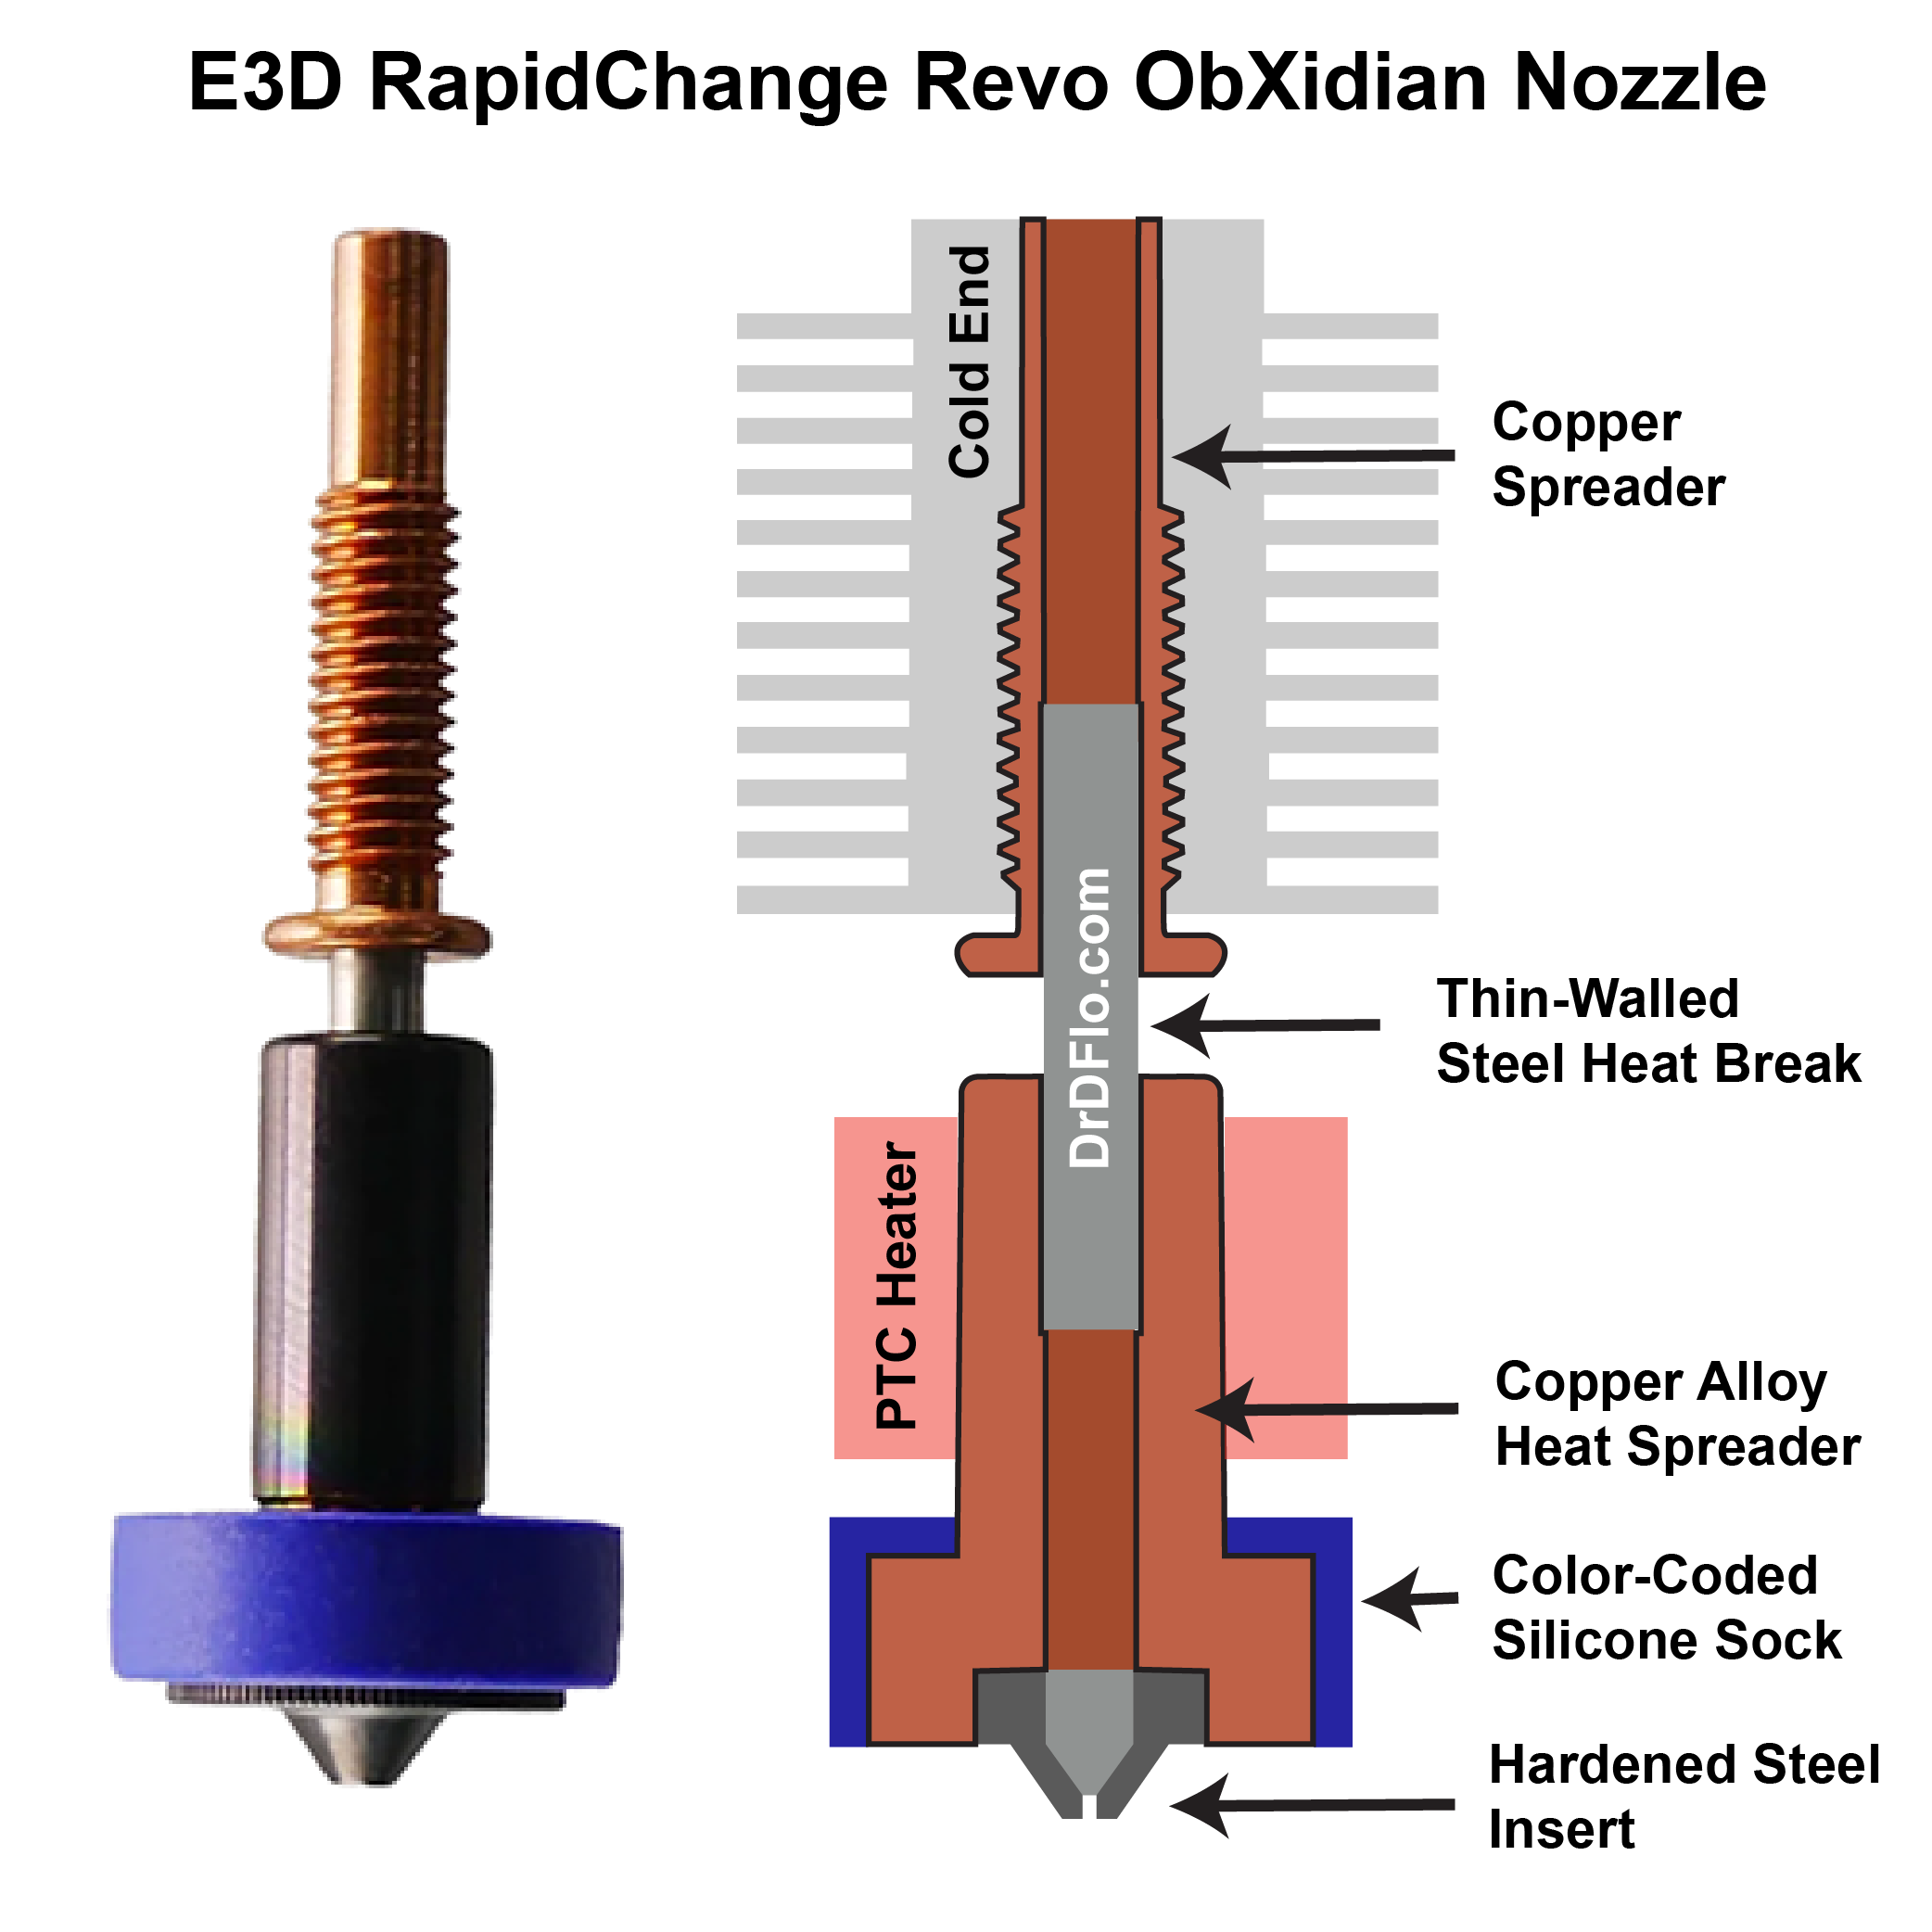 Anatomy of an E3D RapidChange Revo ObXidian Nozzle